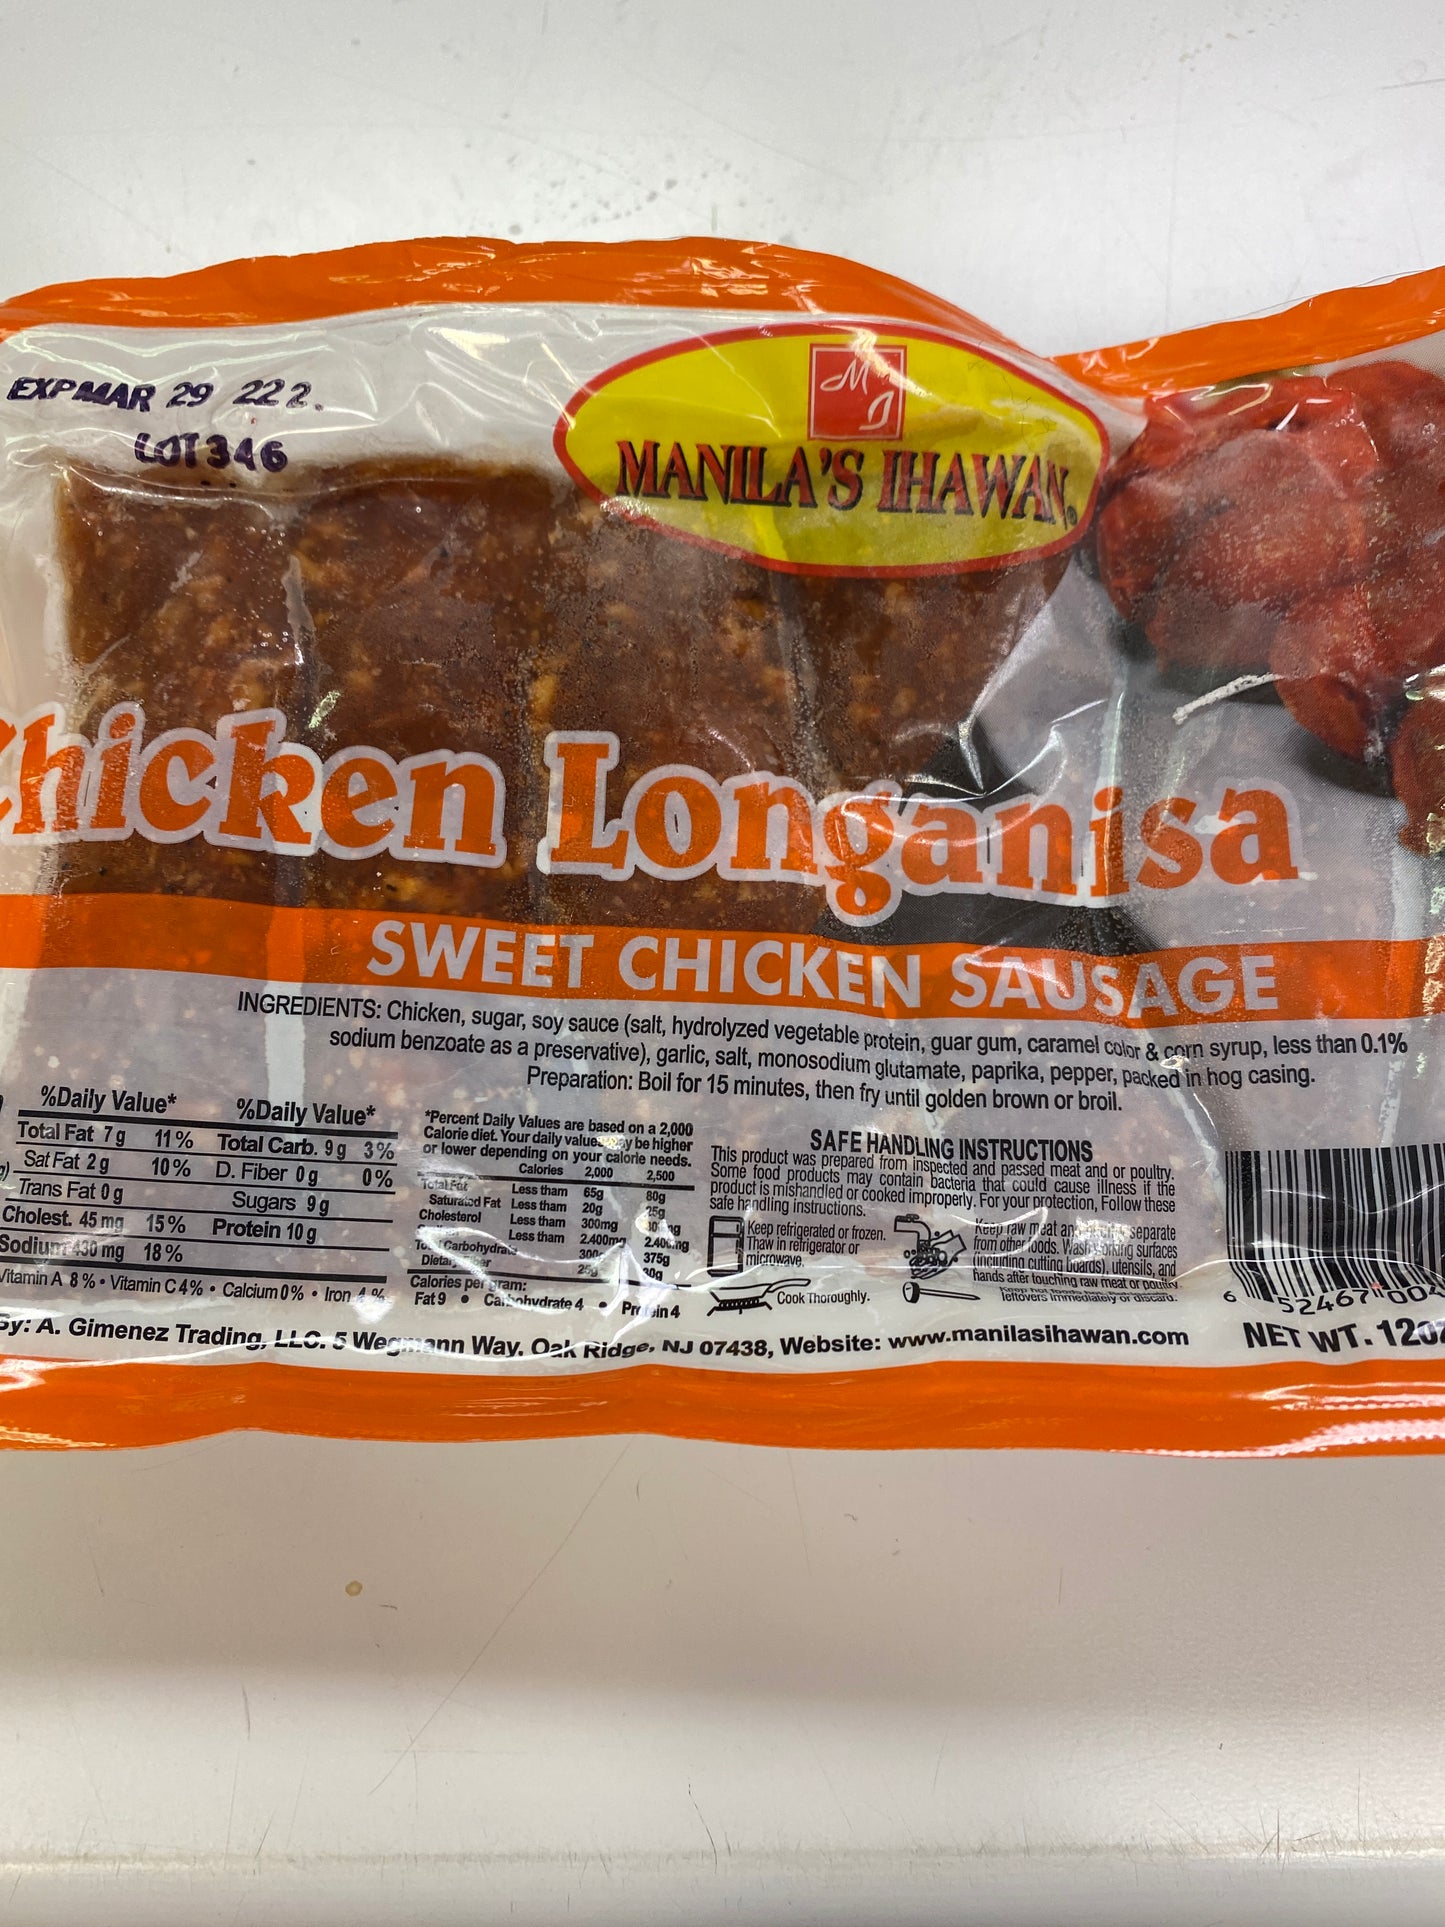 Manila's Ihawan Chicken Longanisa - 12oz